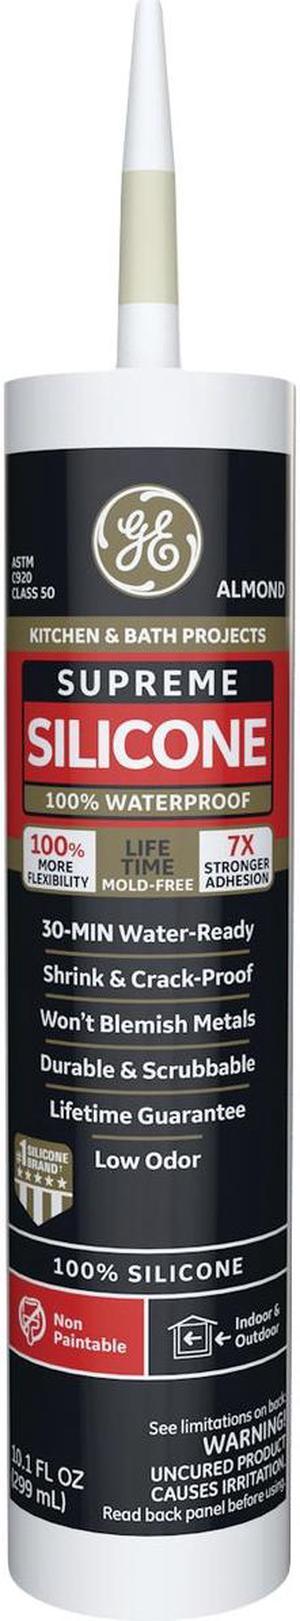 GE Supreme Silicone Kitchen & Bath Sealant, Almond, 10.1oz M90010